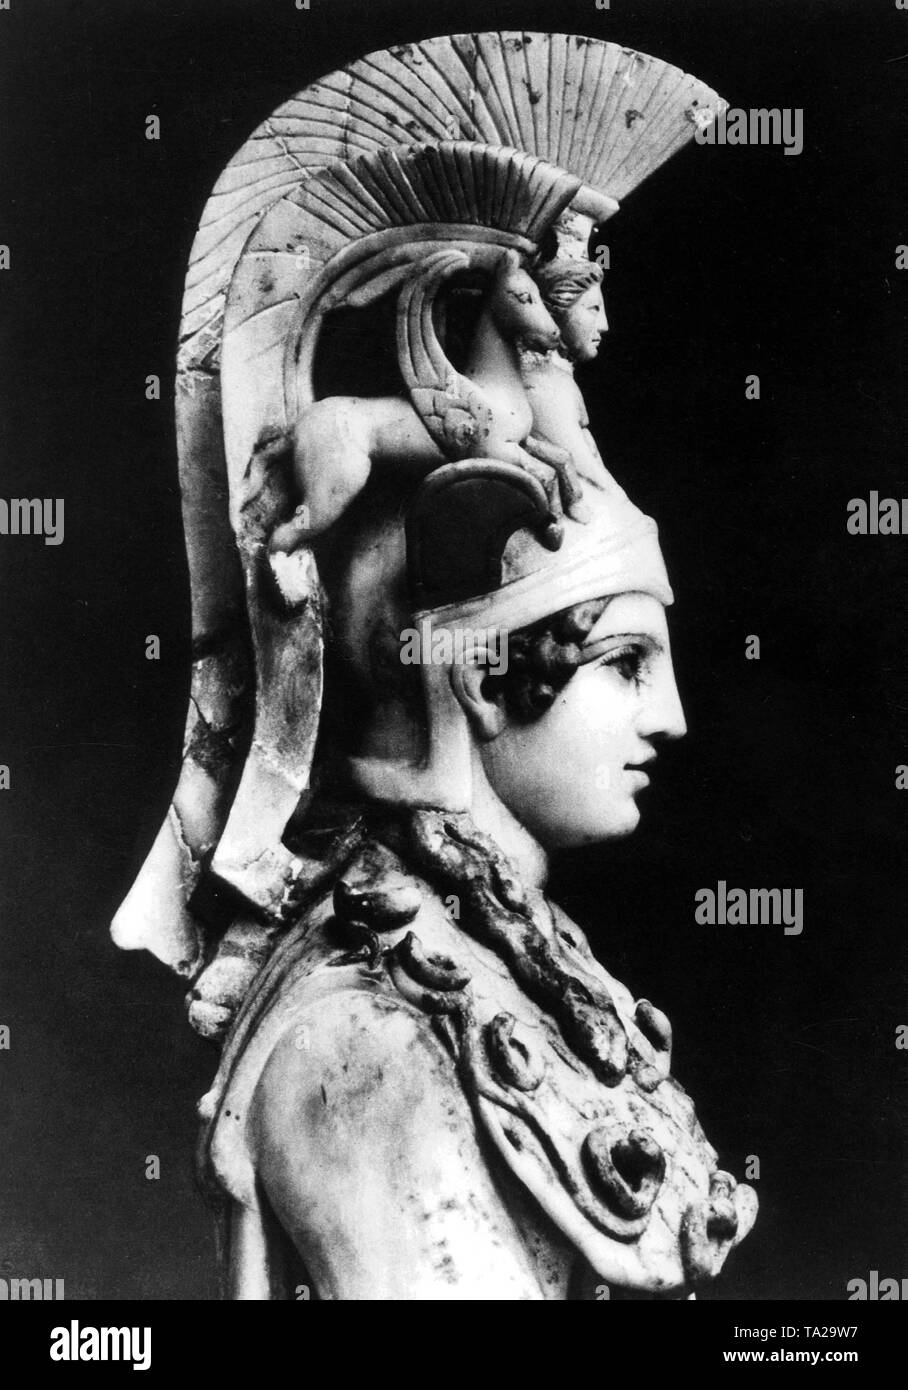 Athena, daughter of Zeus. Roman replica of the Athena Parthenos by Phidias. Ivory, from around the 2nd/3rd century AD. Stock Photo